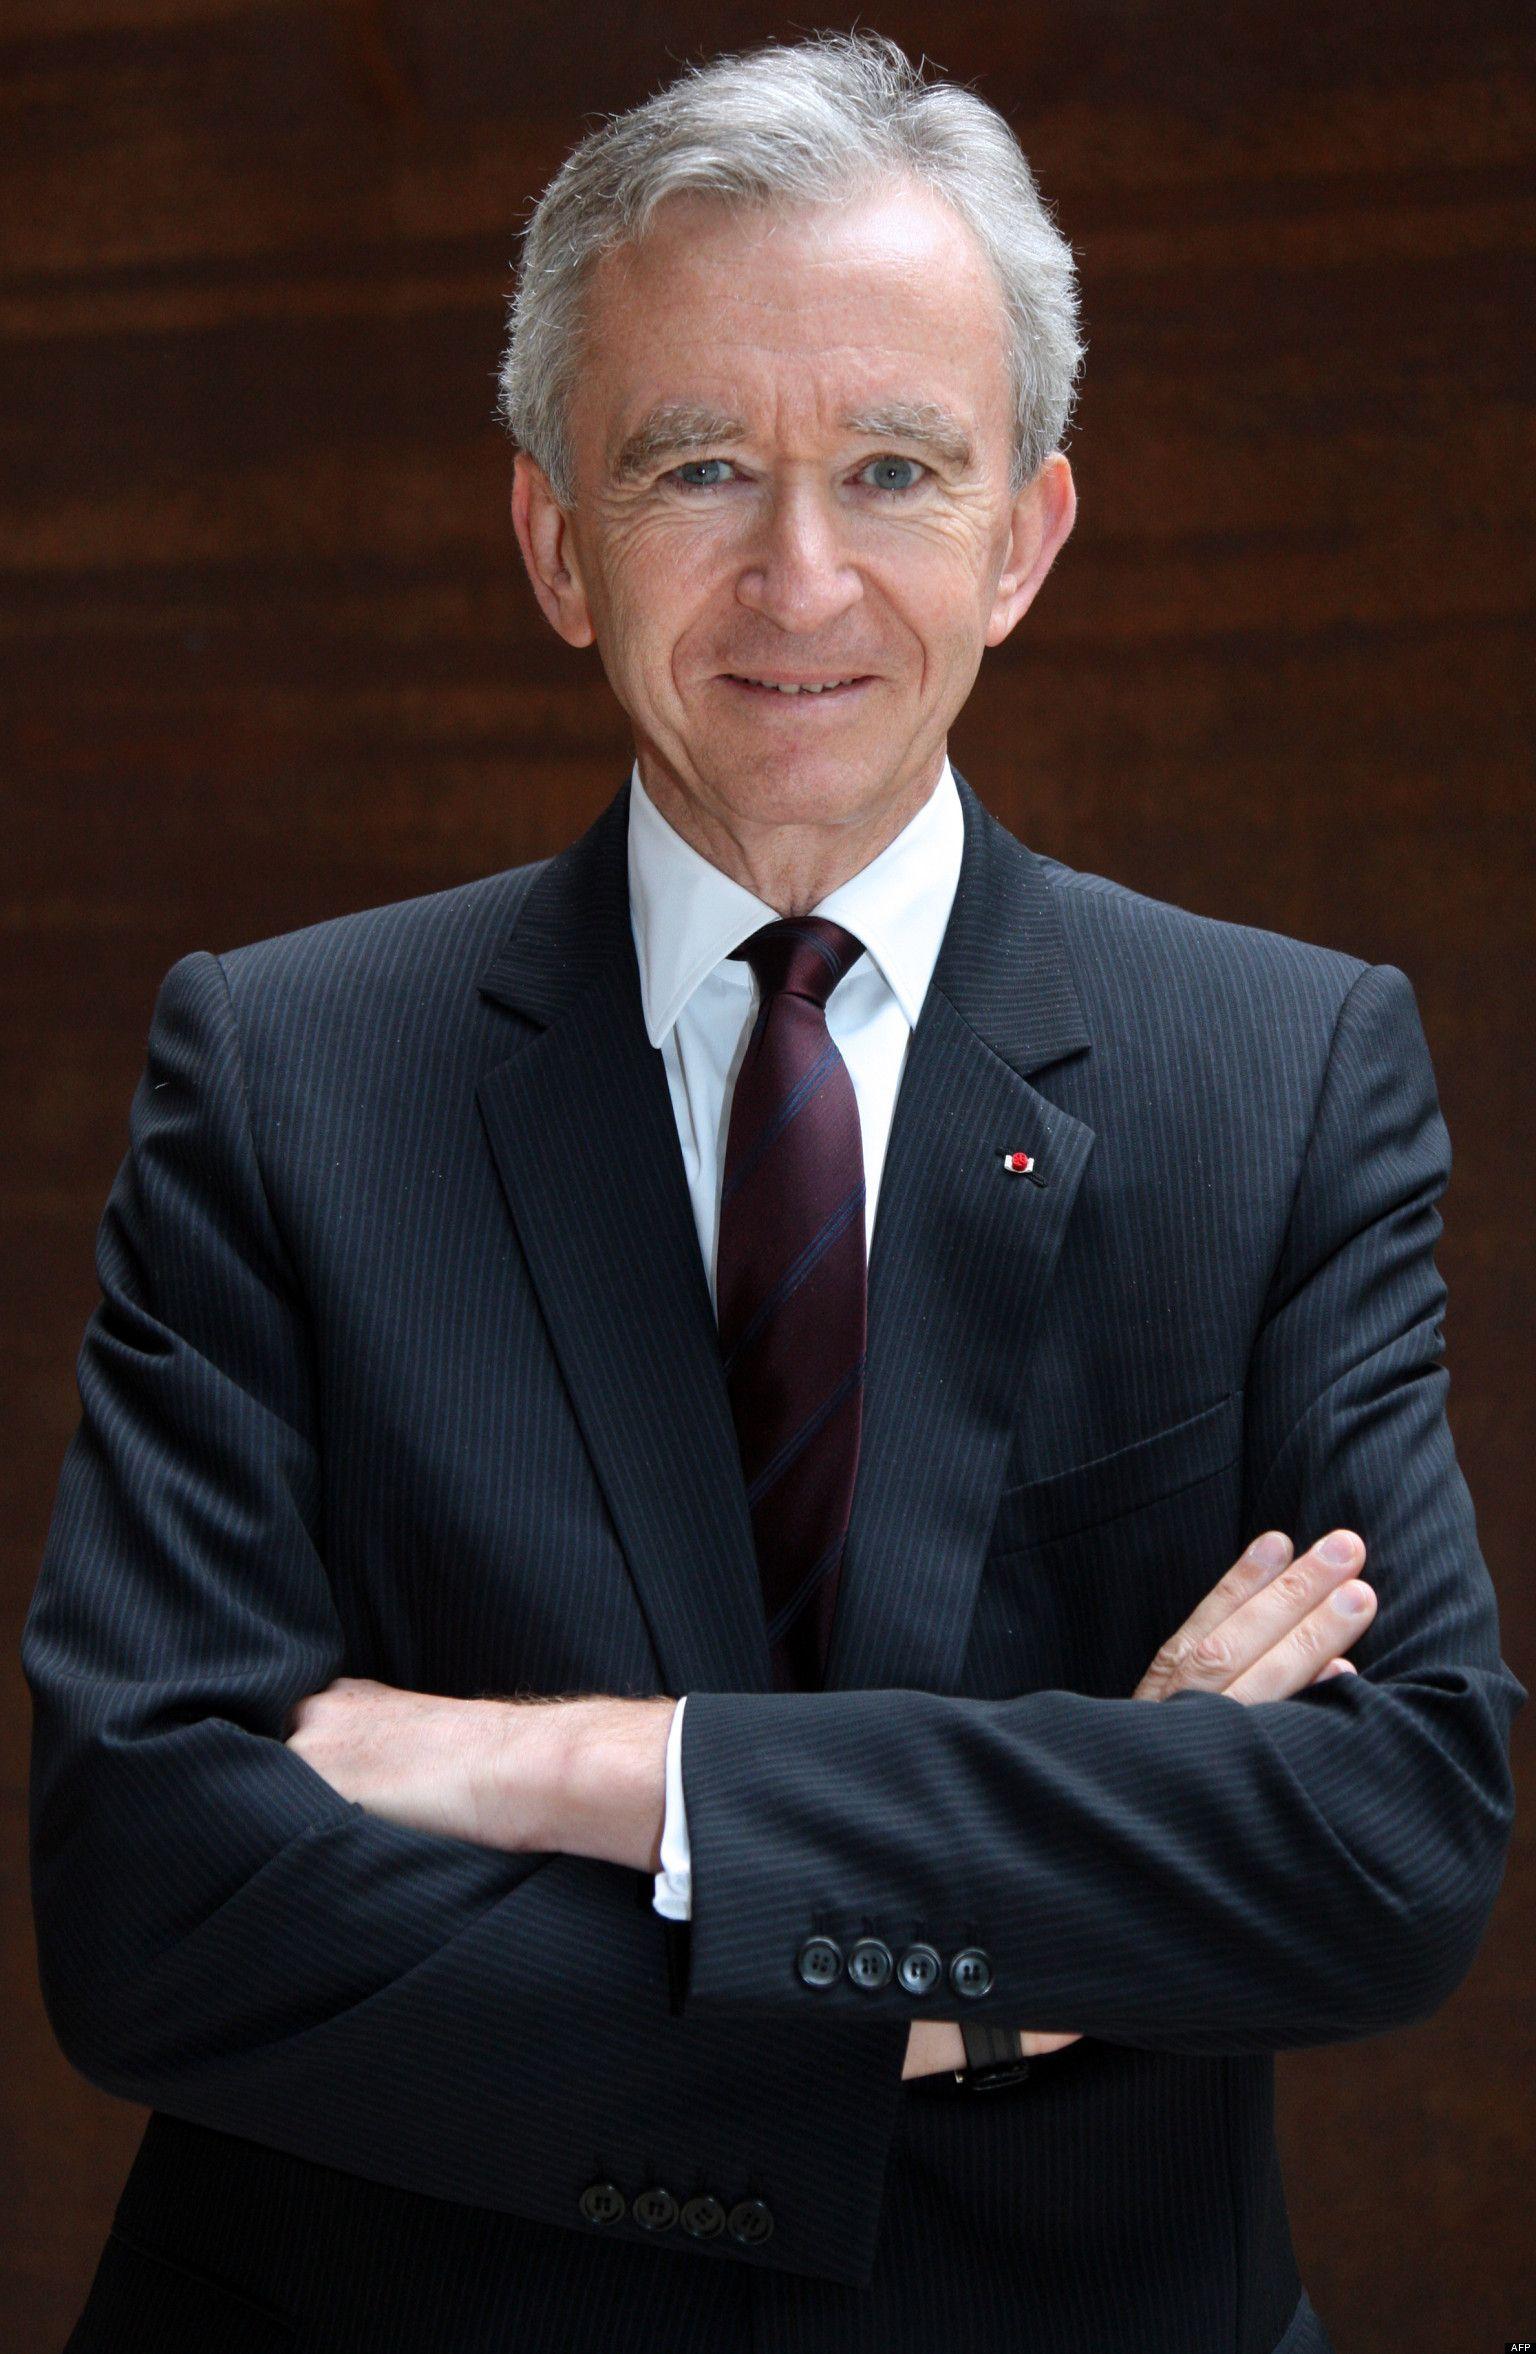 Bernard Arnault and CEO LVMH Net worth $38 billion